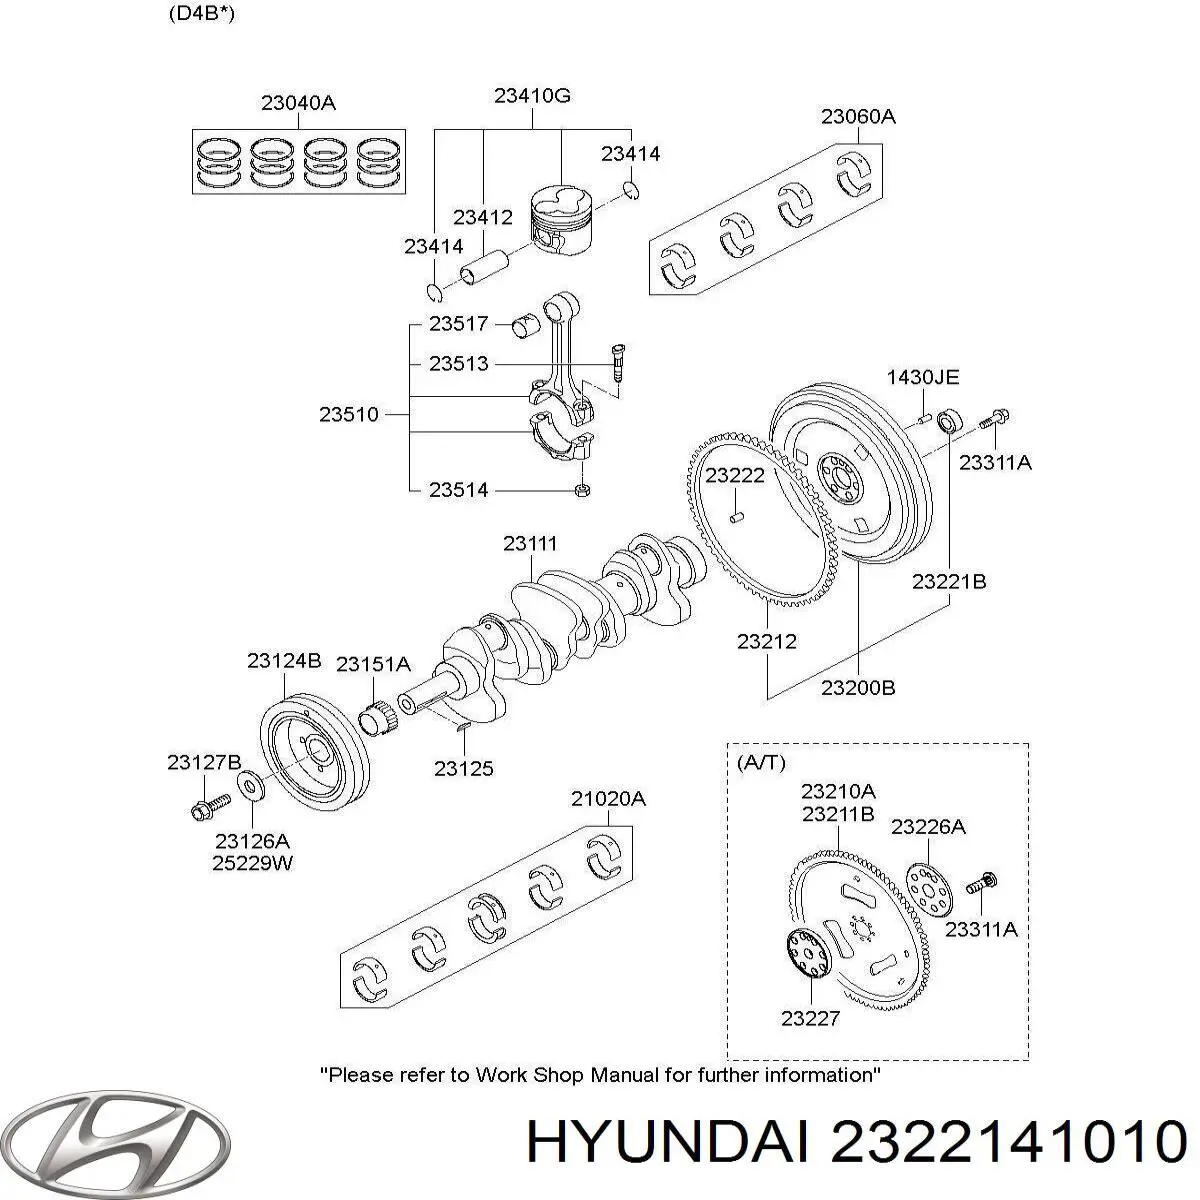 Опорный подшипник первичного вала КПП (центрирующий подшипник маховика) Hyundai/Kia 2322141010